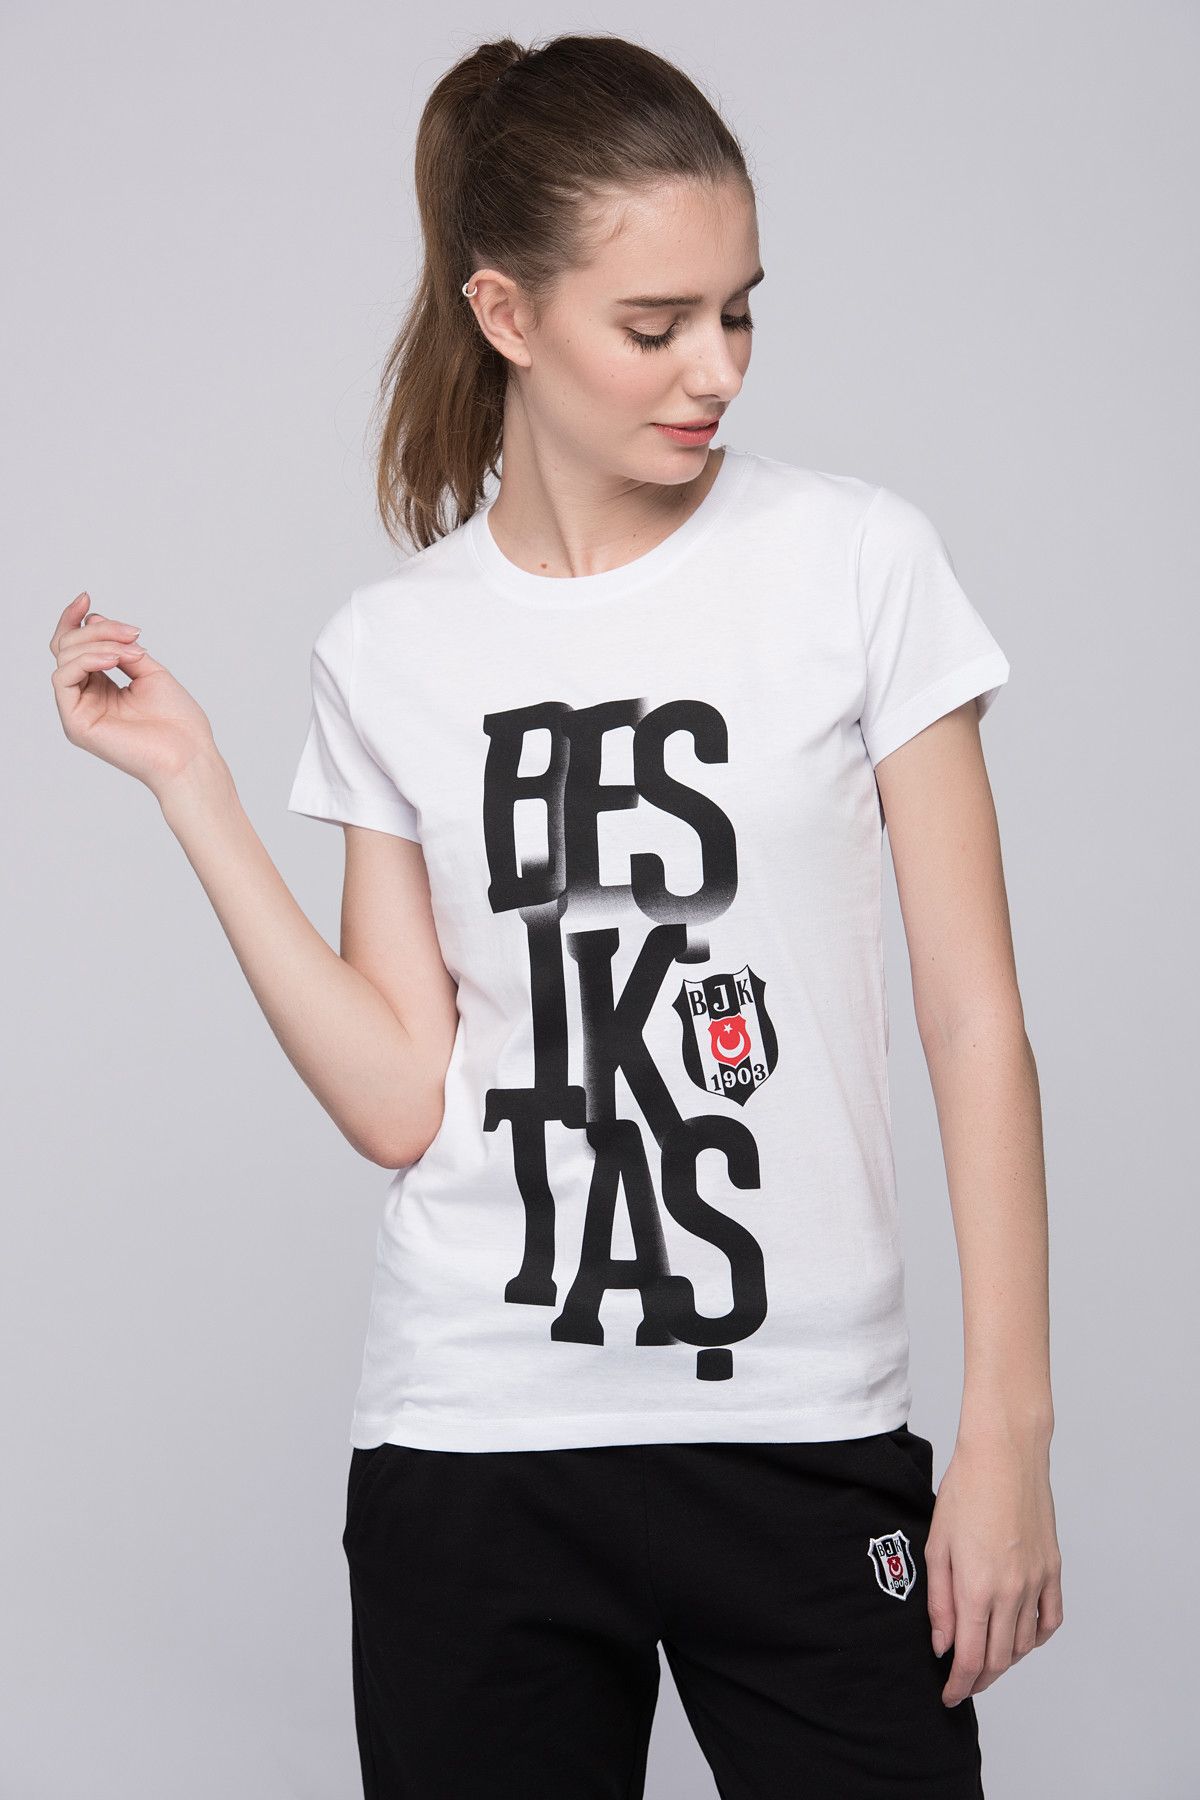 Beşiktaş Kadın Beyaz T-Shirt - 8YESB03001